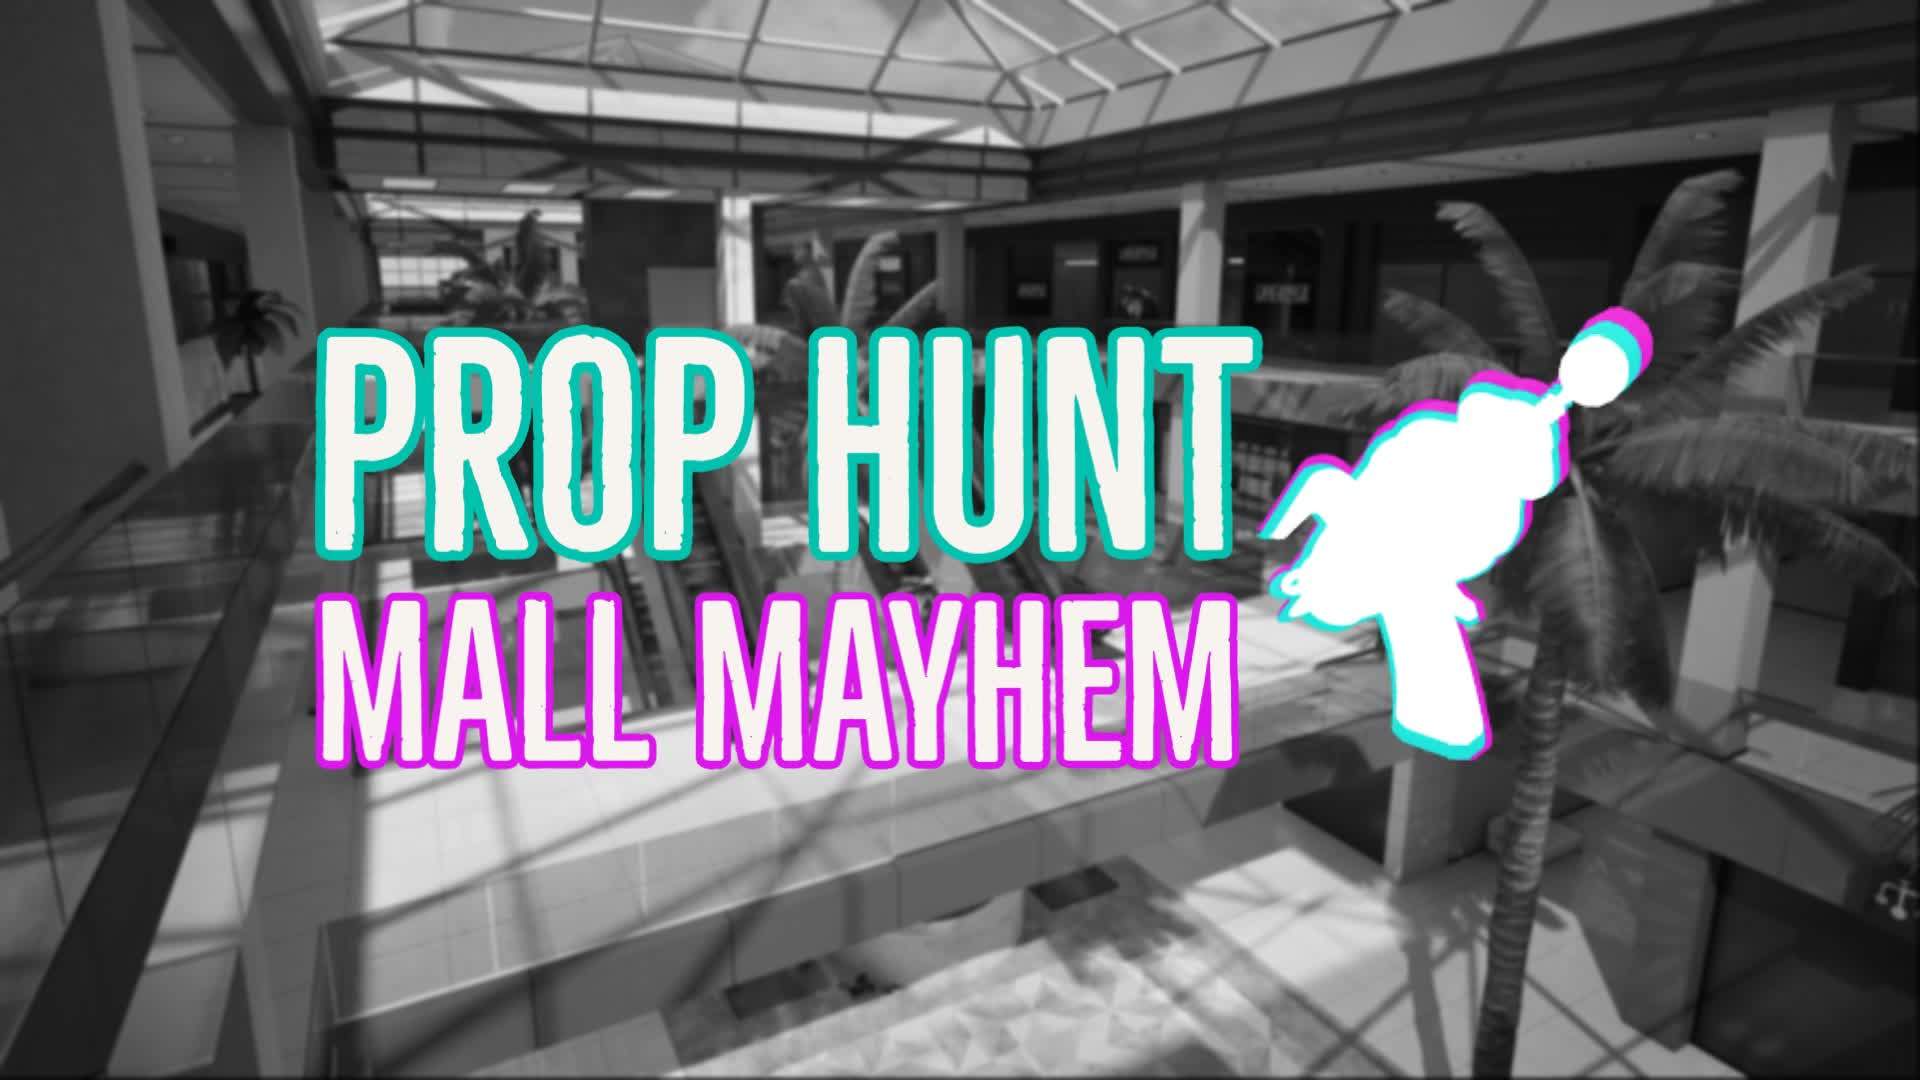 Prop Hunt - Mall Mayhem